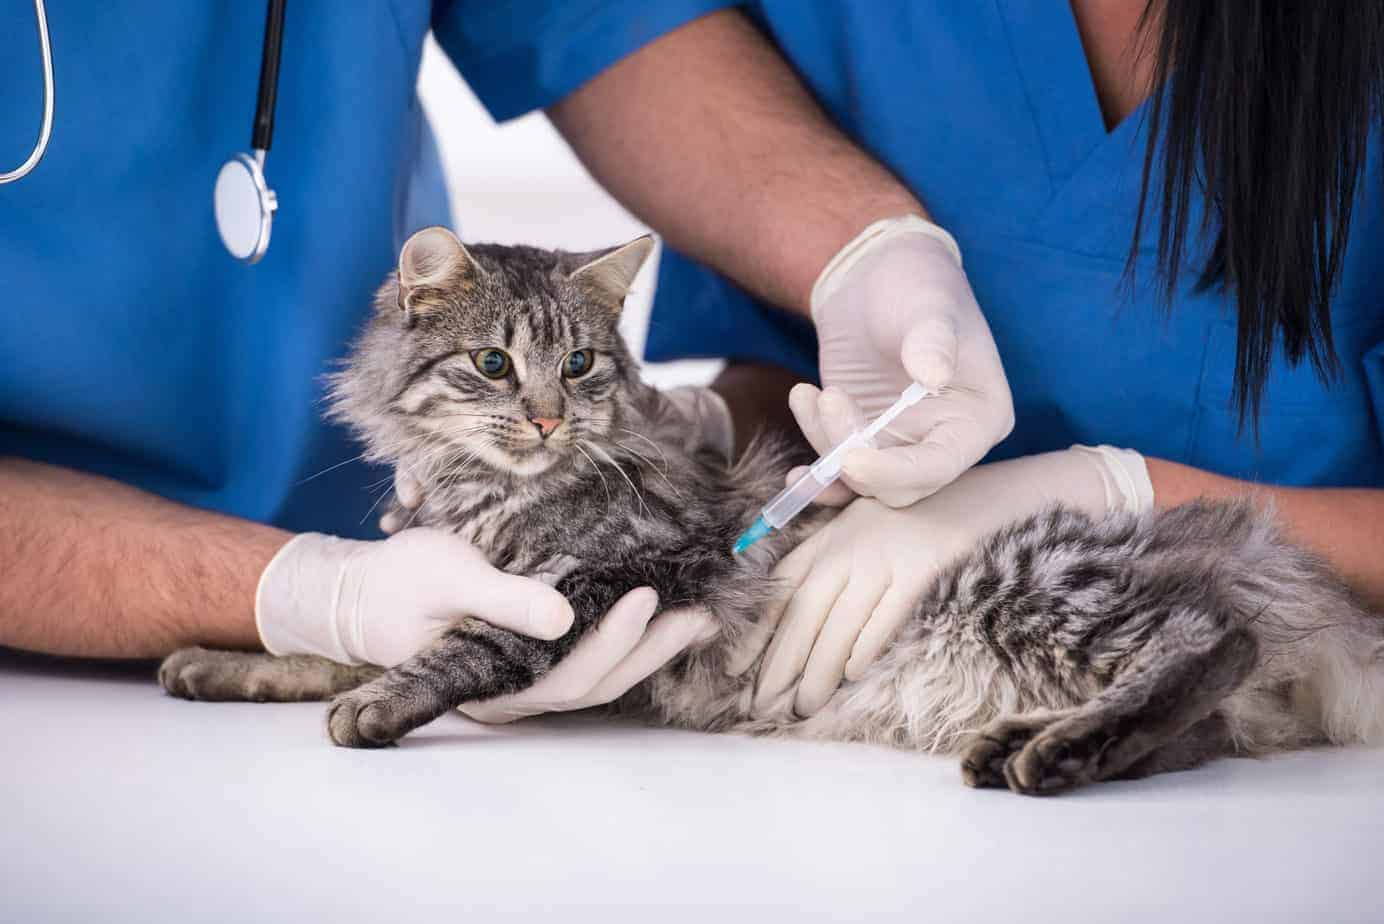 Is Covid-19 coronavirus as dangerous in cats as it is in humans? 1